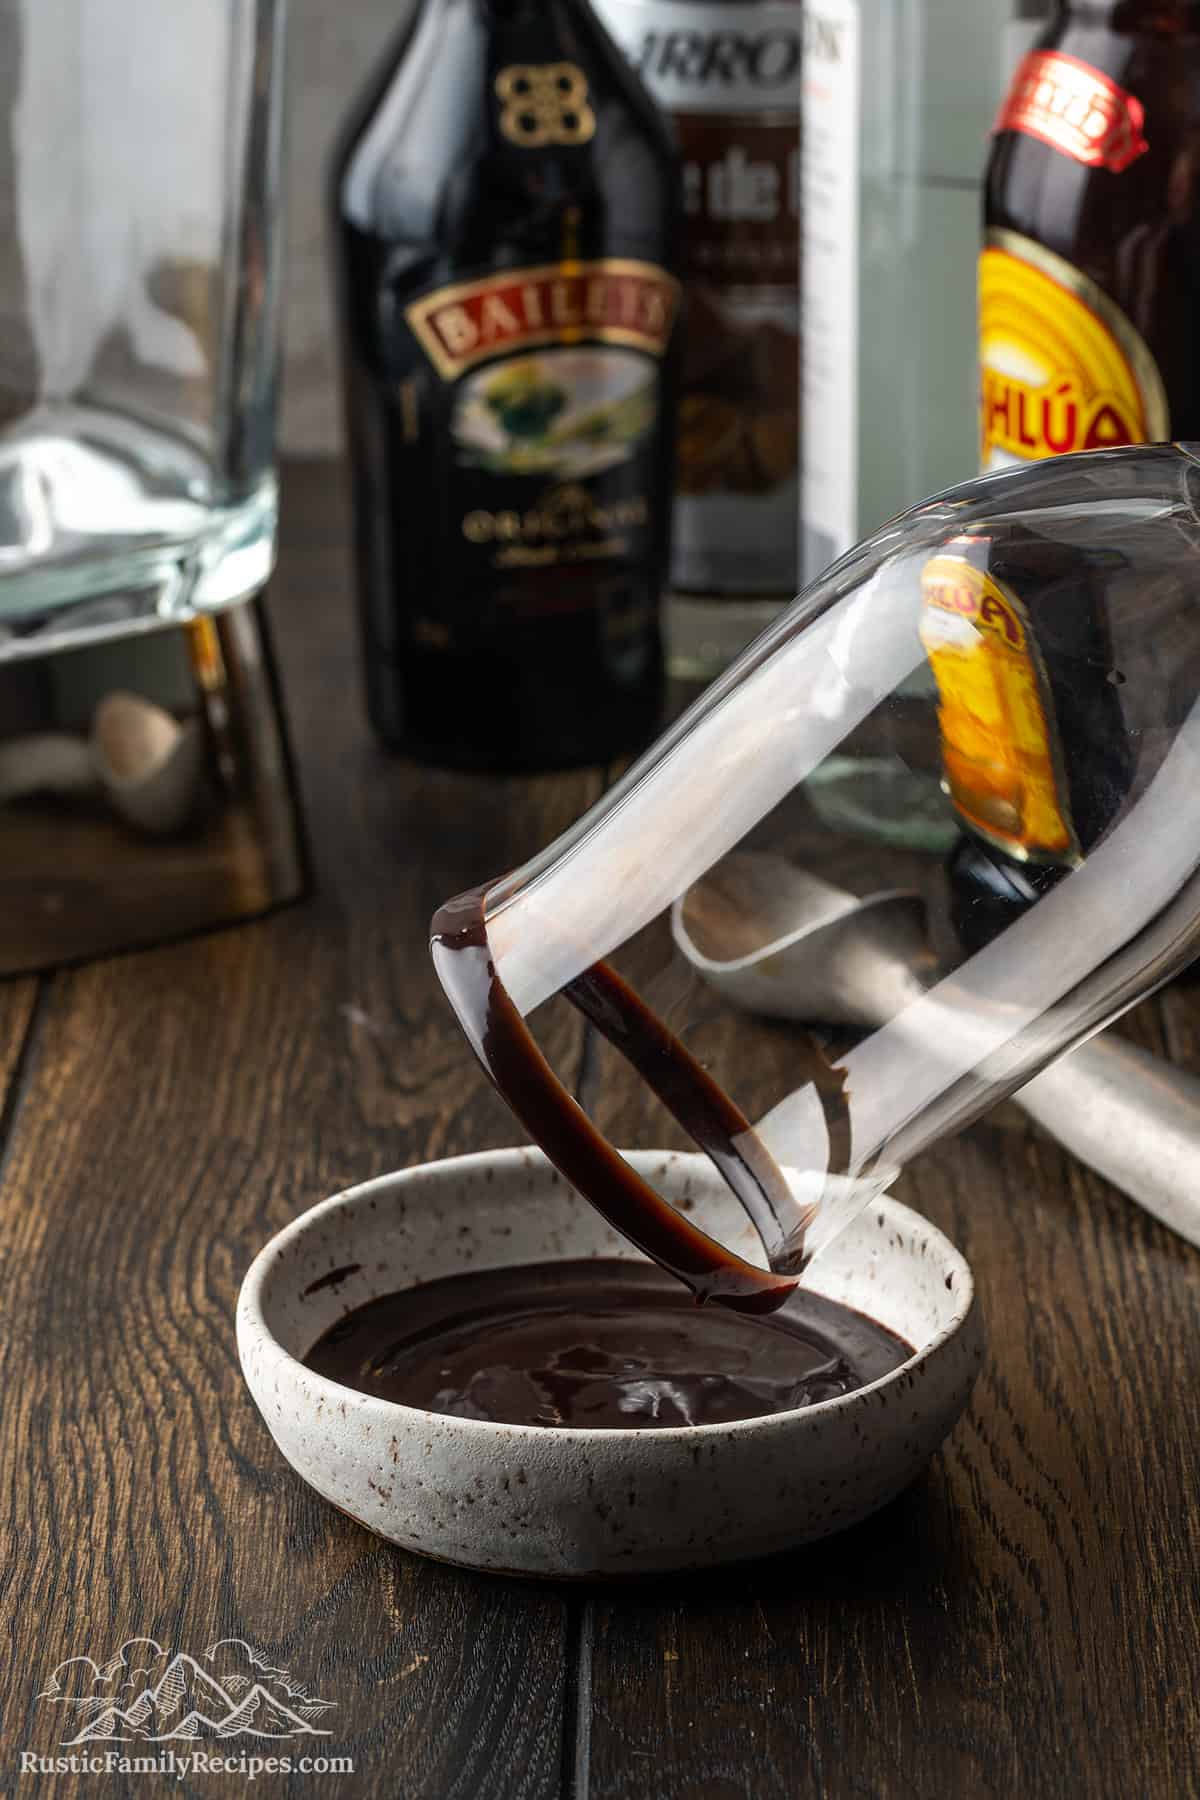 Adding a chocolate rim to a hurricane glass